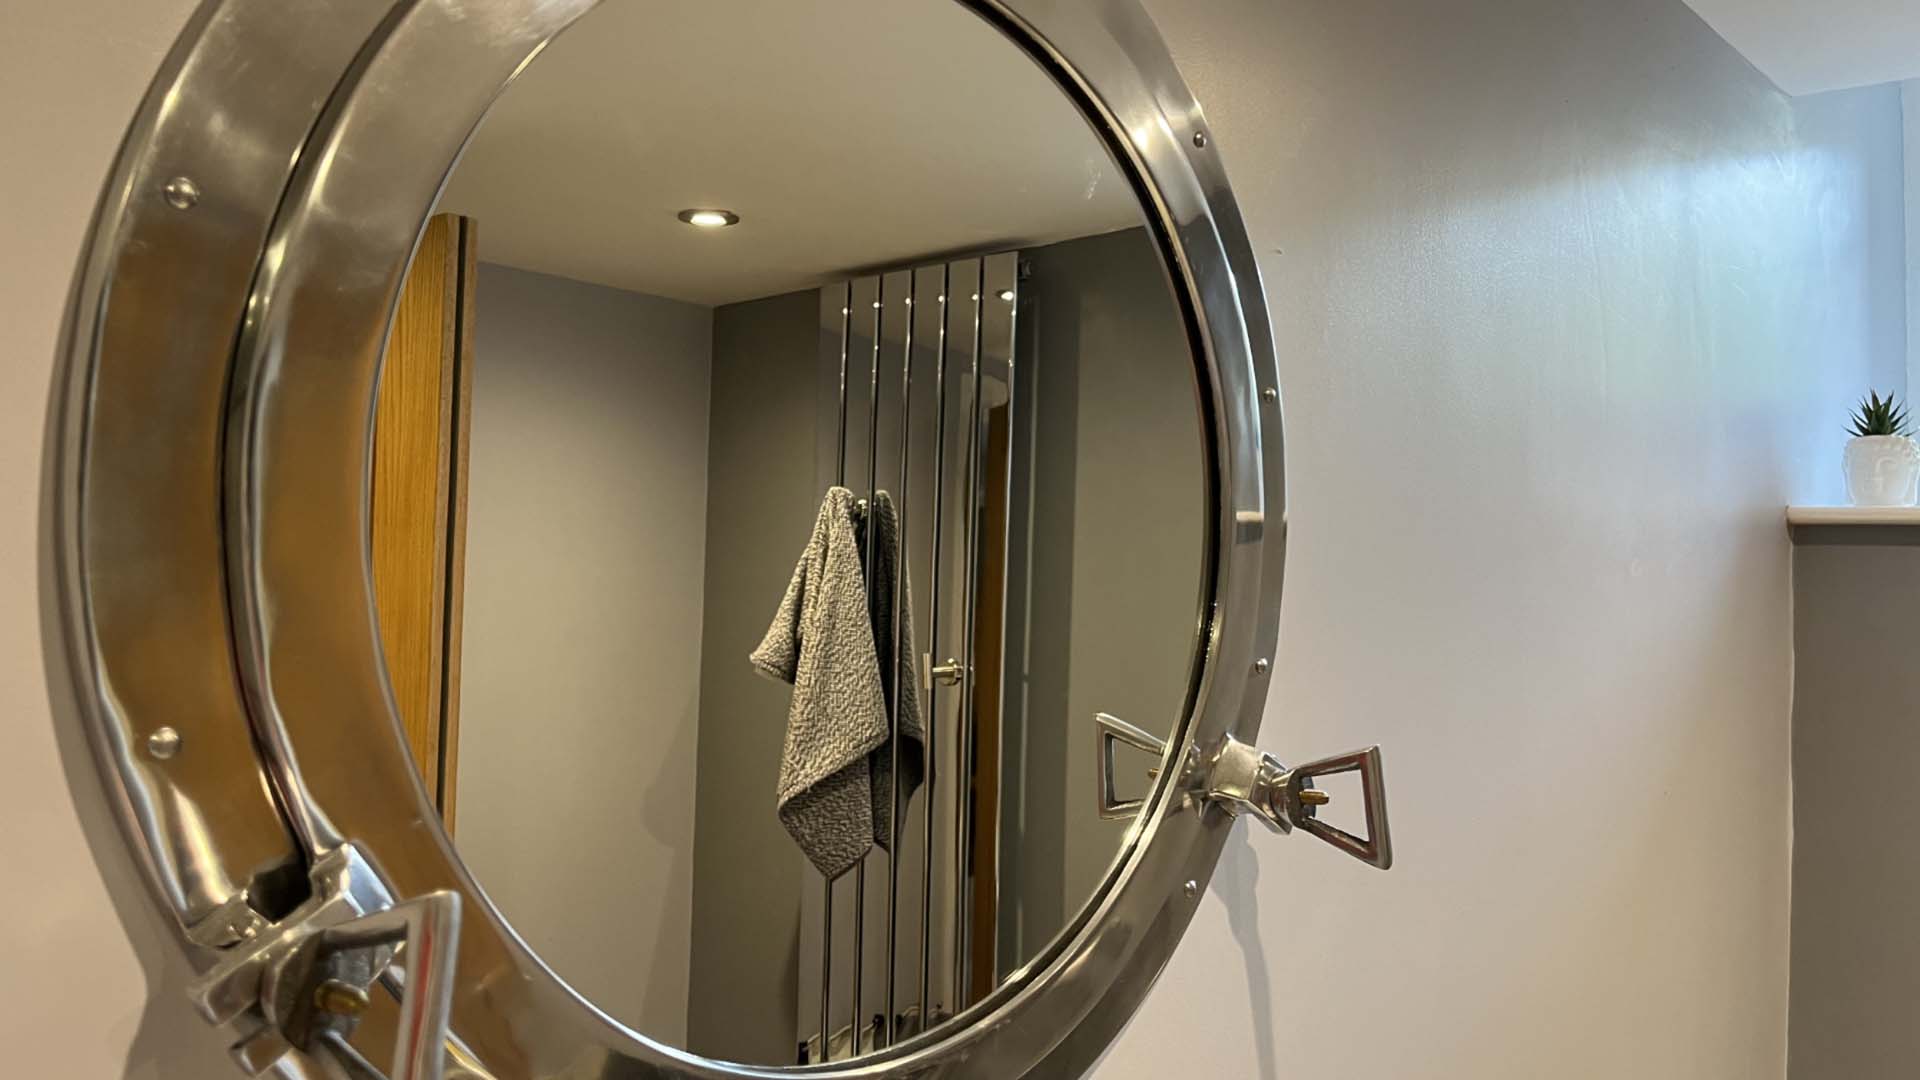 A round mirror in a bathroom